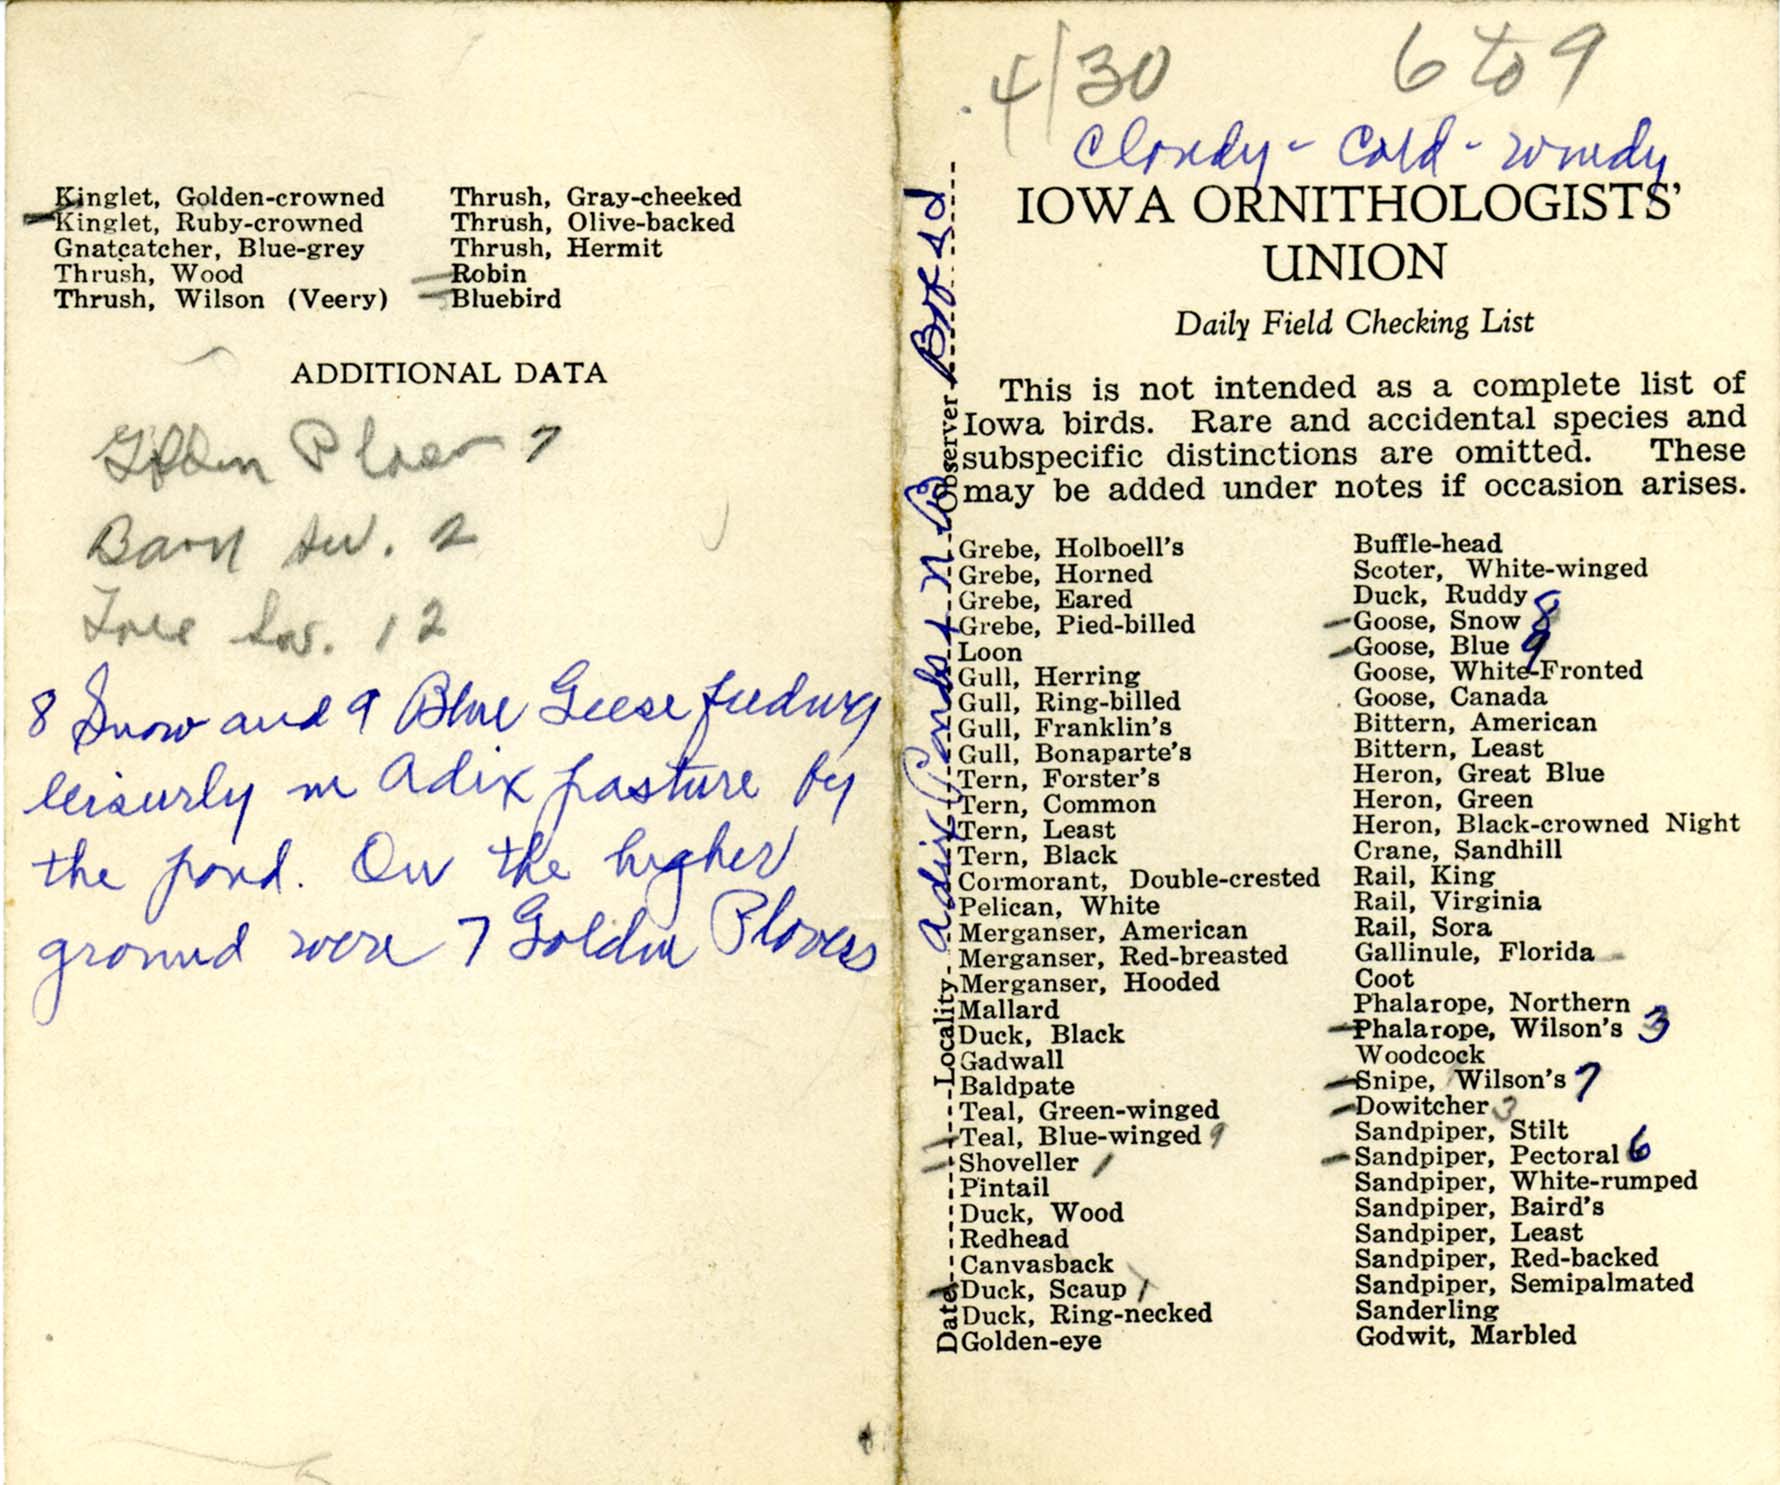 Daily field checking list, Walter Rosene, April 30, 1932